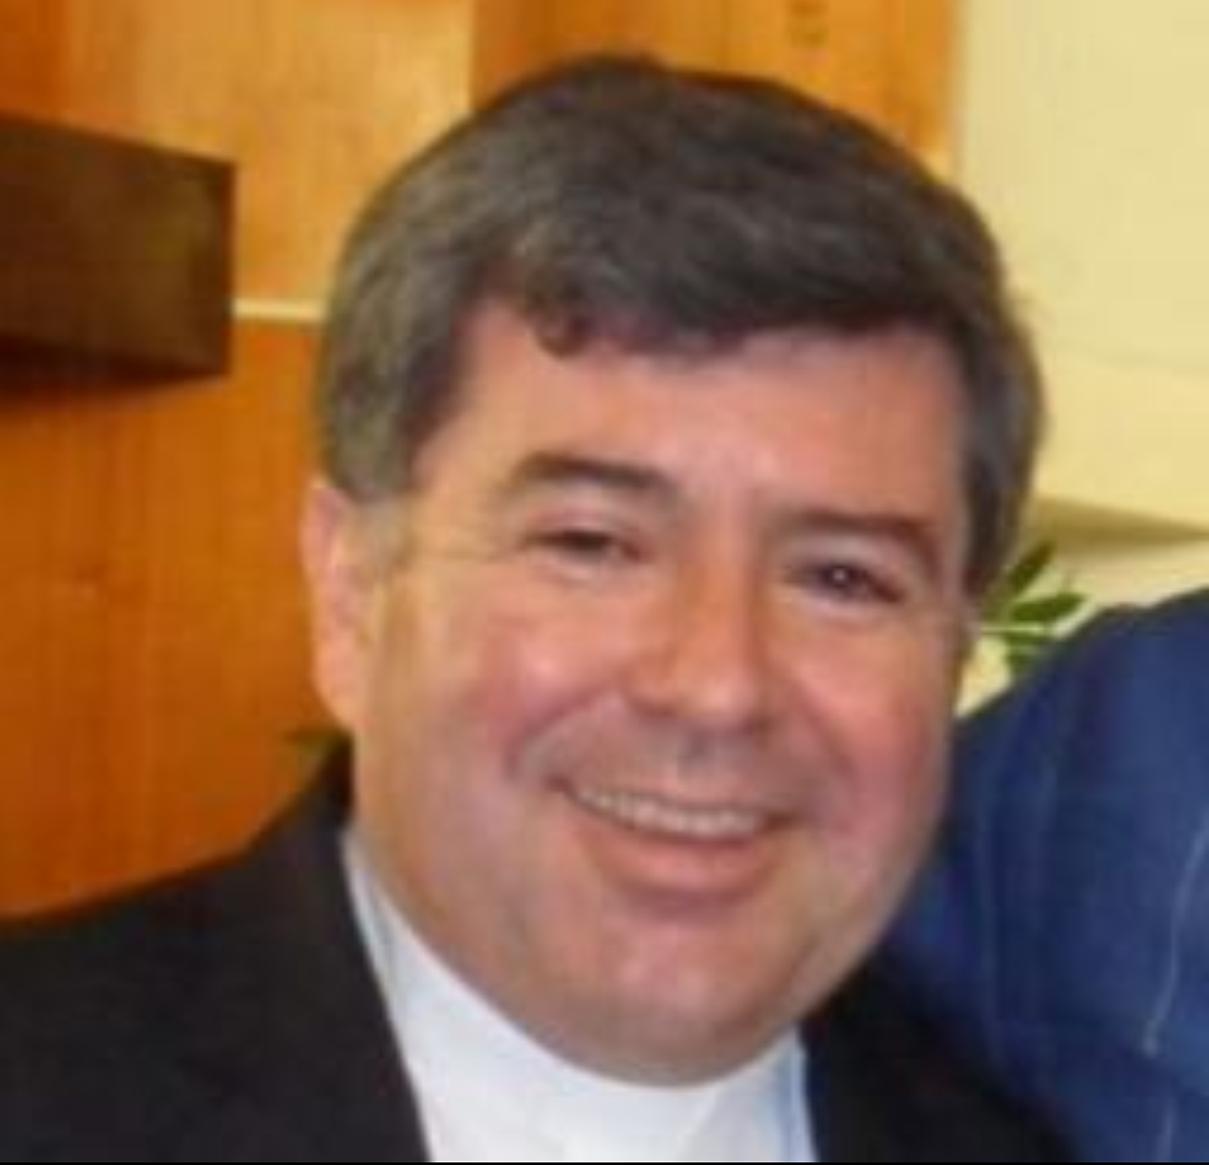 Feligreses lamentan muerte por Covid-19 del sacerdote Fausto Silva Omaña